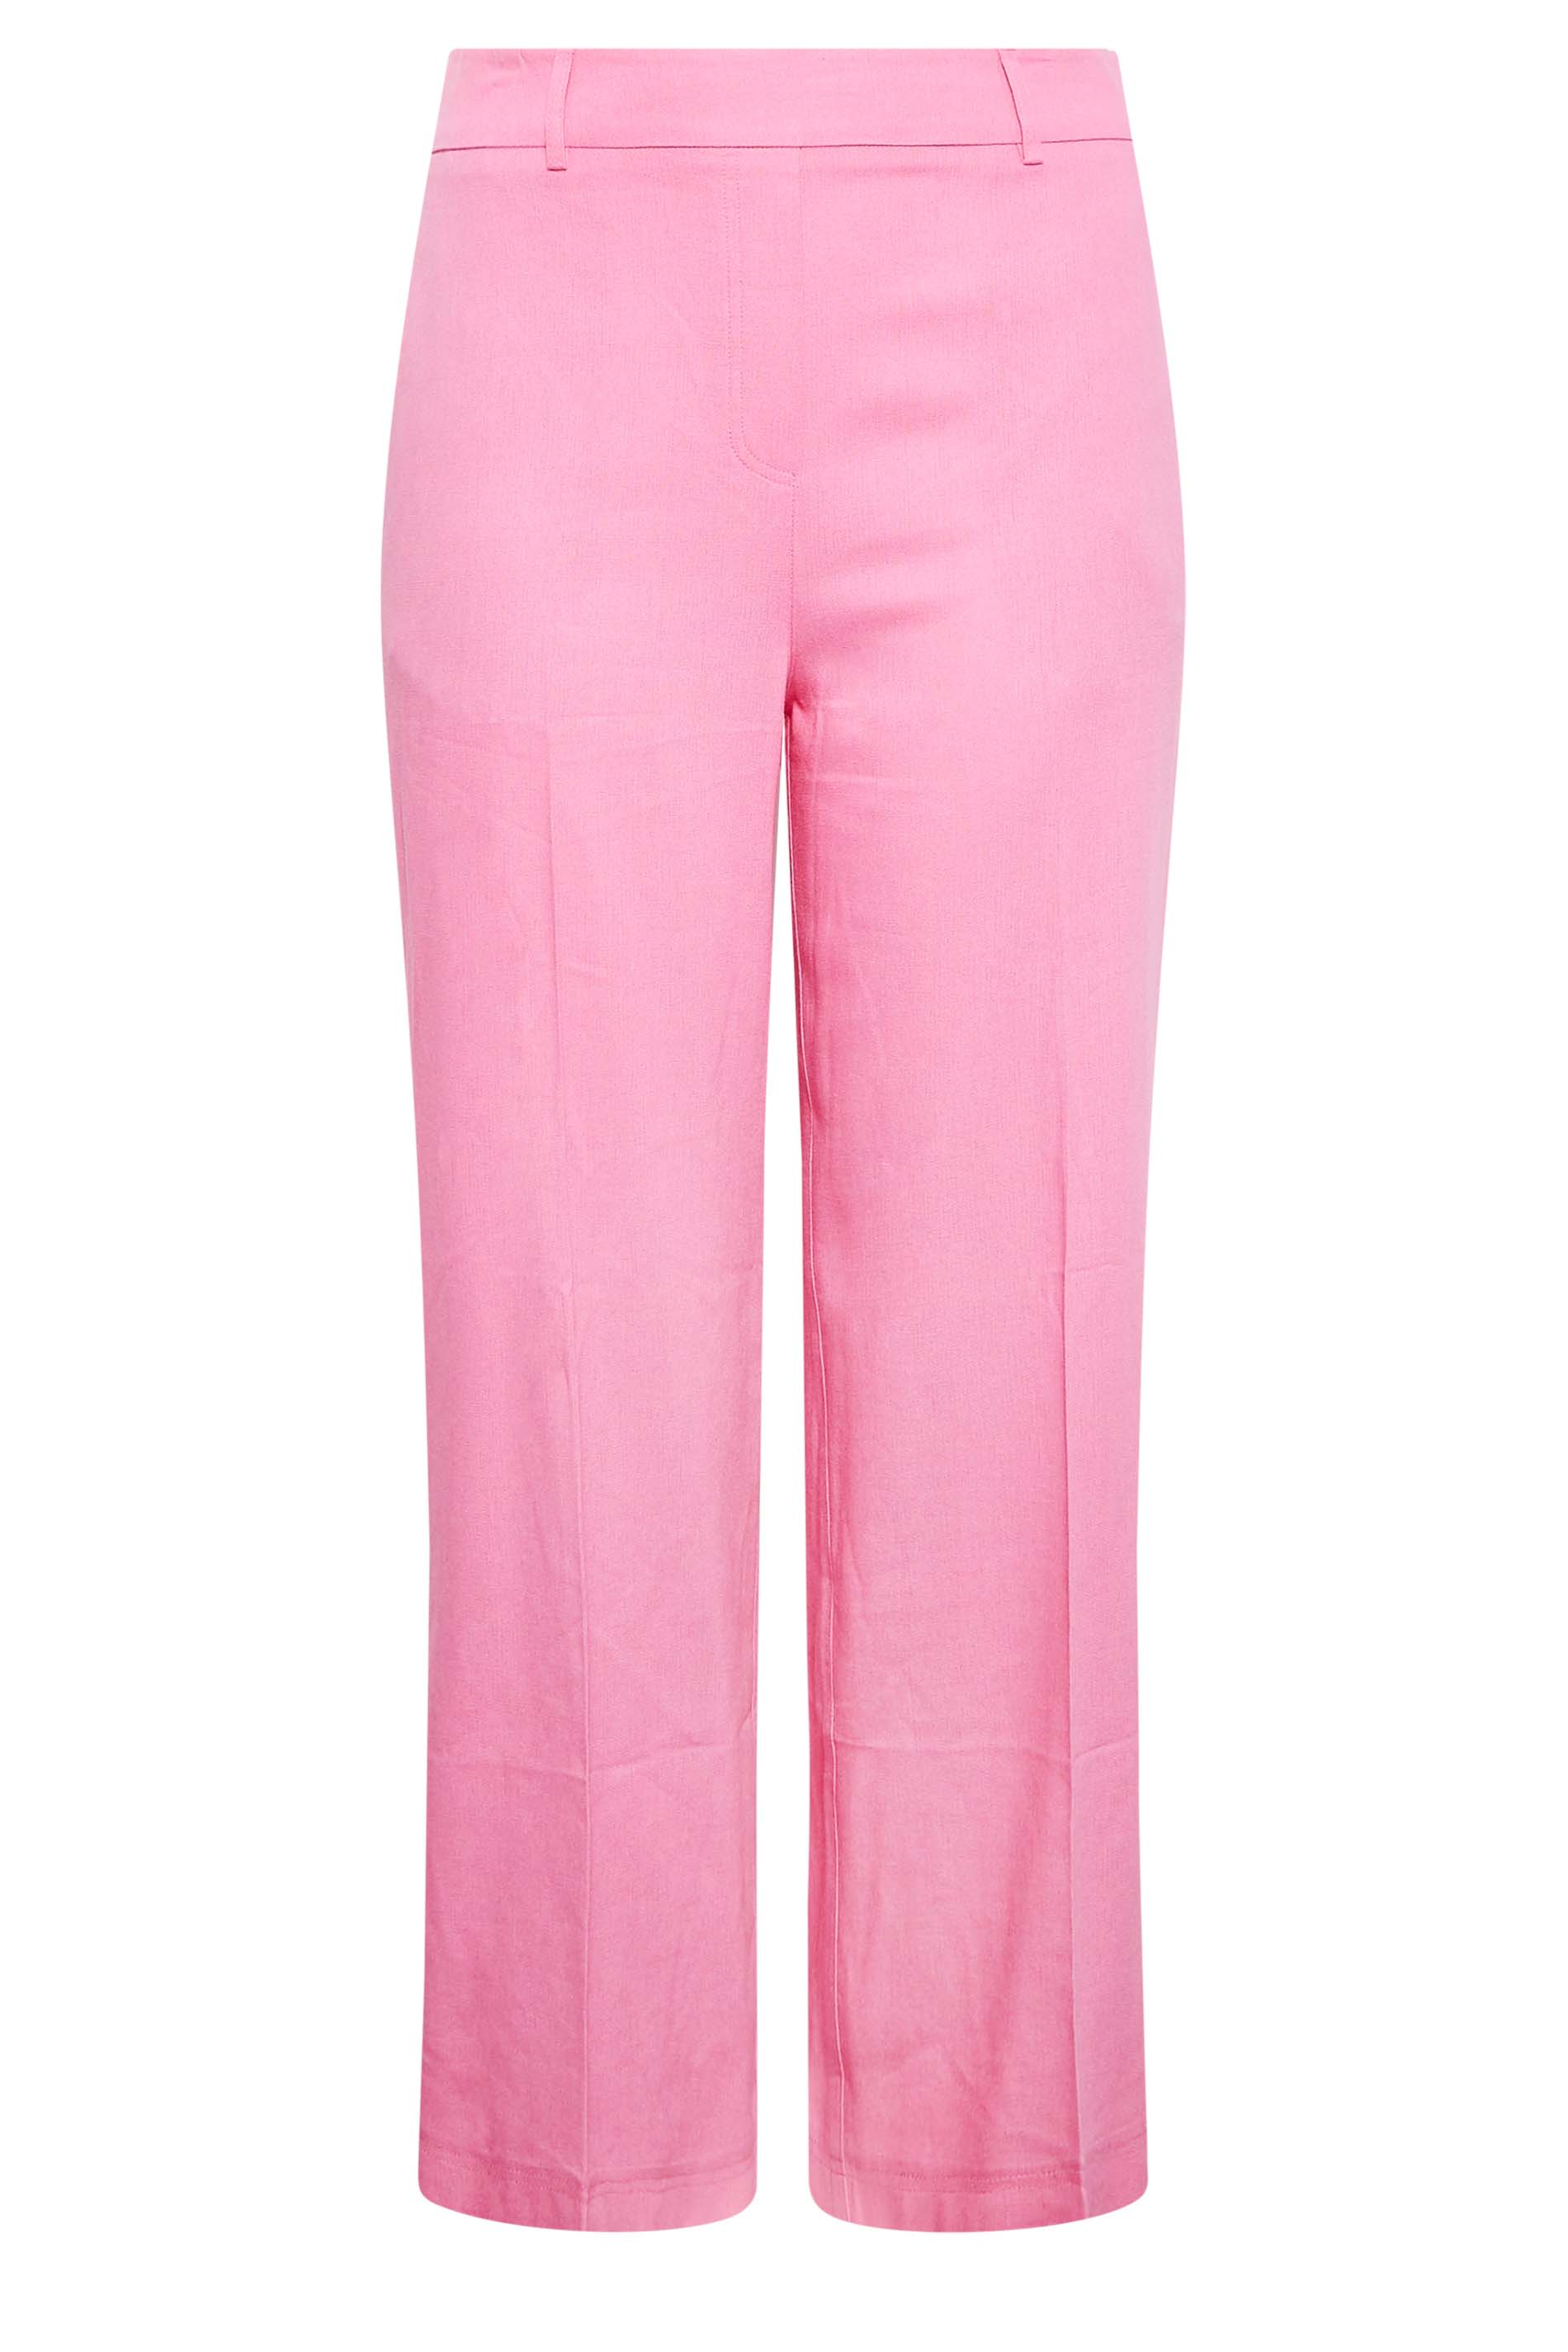 YOURS Plus Size Curve Pink Linen Blend Wide Leg Trousers